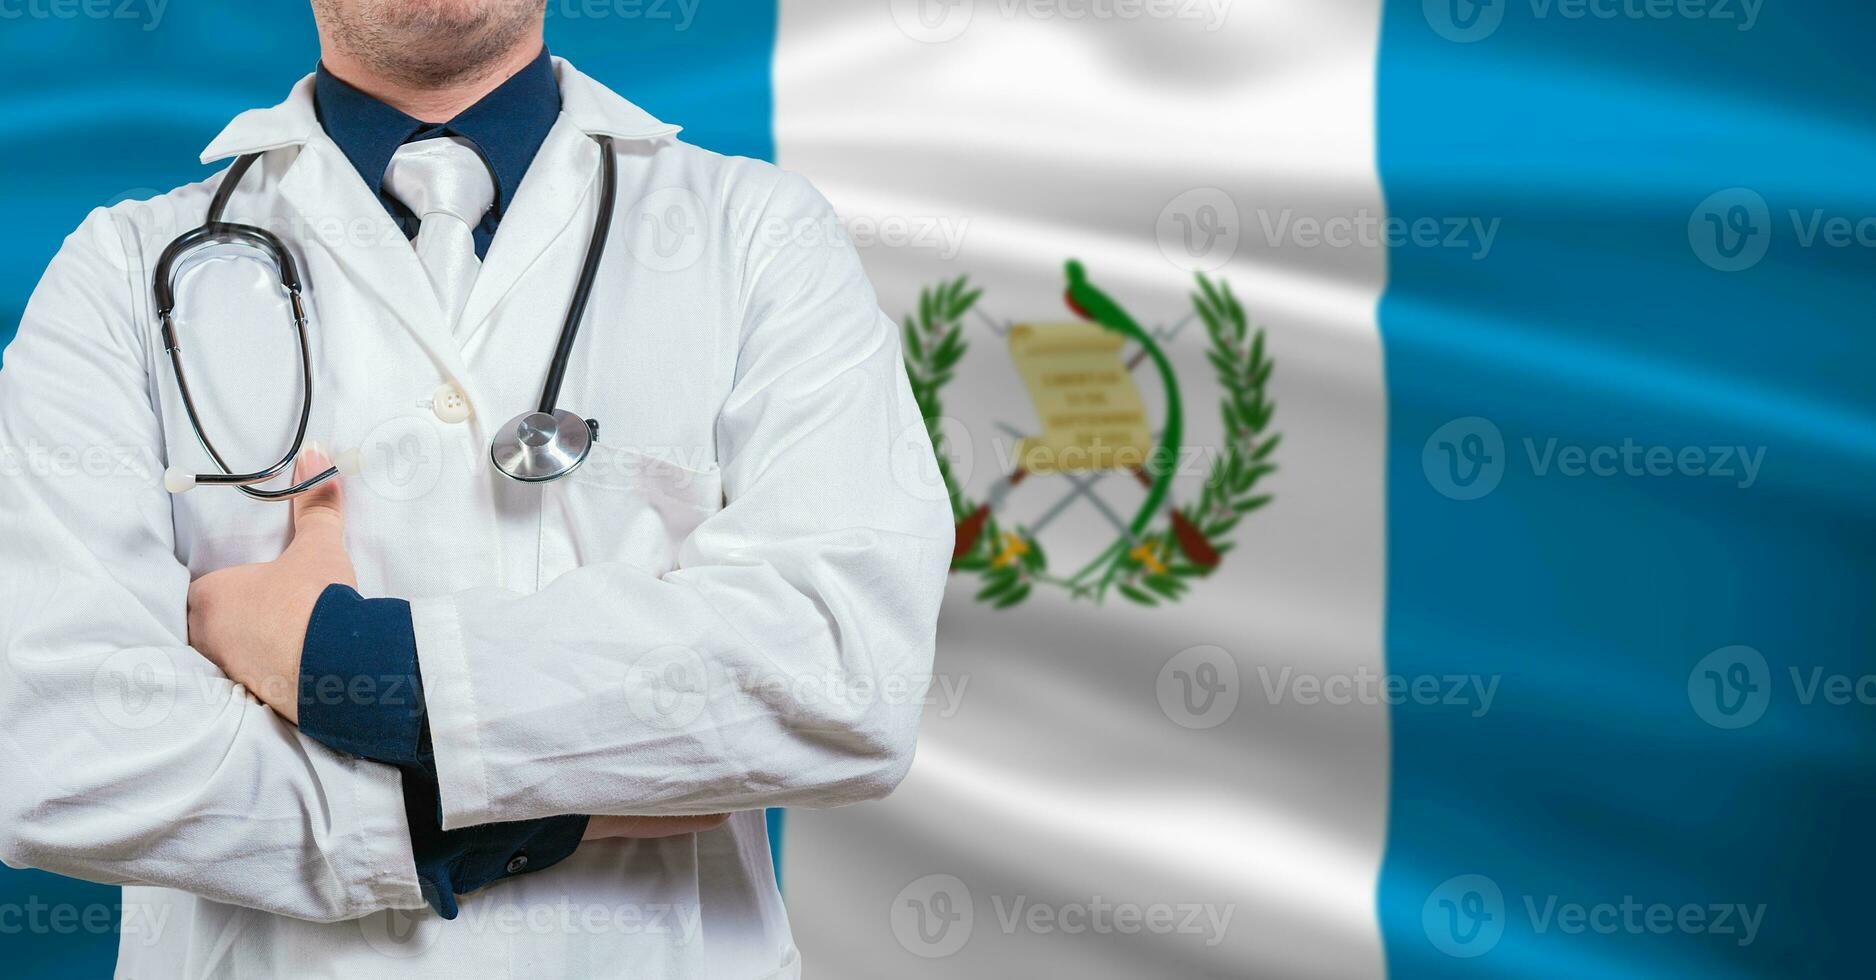 Doctor with stethoscope on guatemala flag. Doctor arms crossed with stethoscope on Guatemala flag, Guatemala national health concept photo